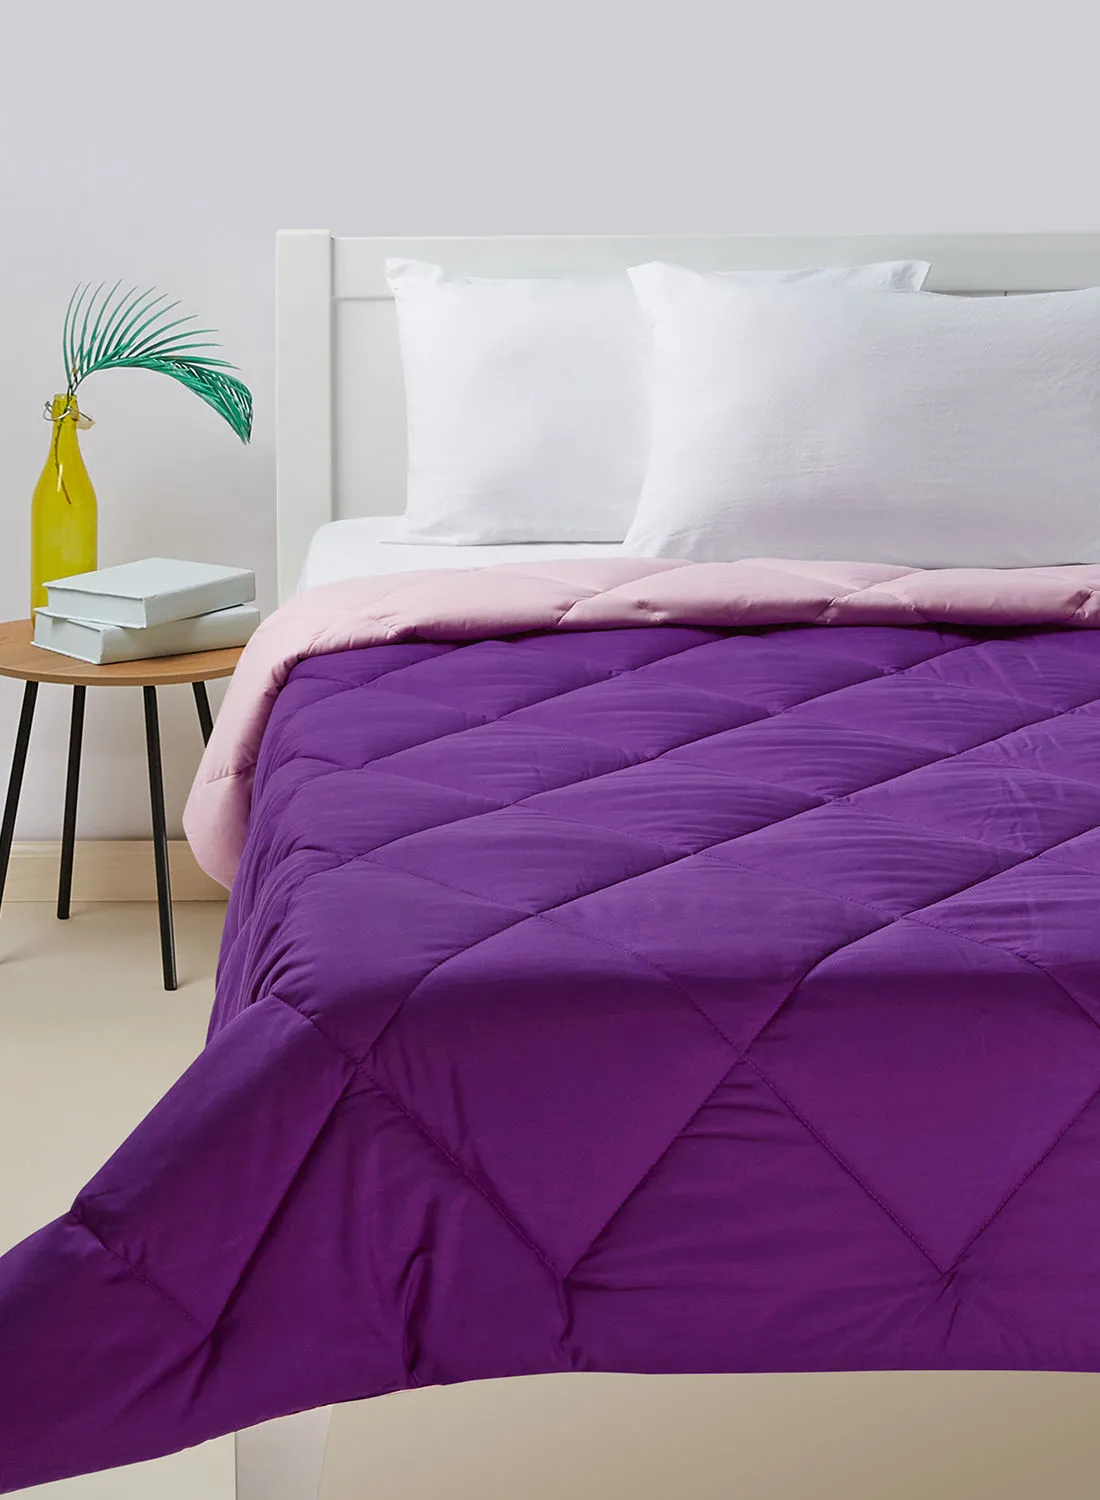 Amal Comforter Queen Size All Season Everyday Use Bedding Set Extra Soft Microfiber Single Piece Reversible Comforter   Purple/Blush